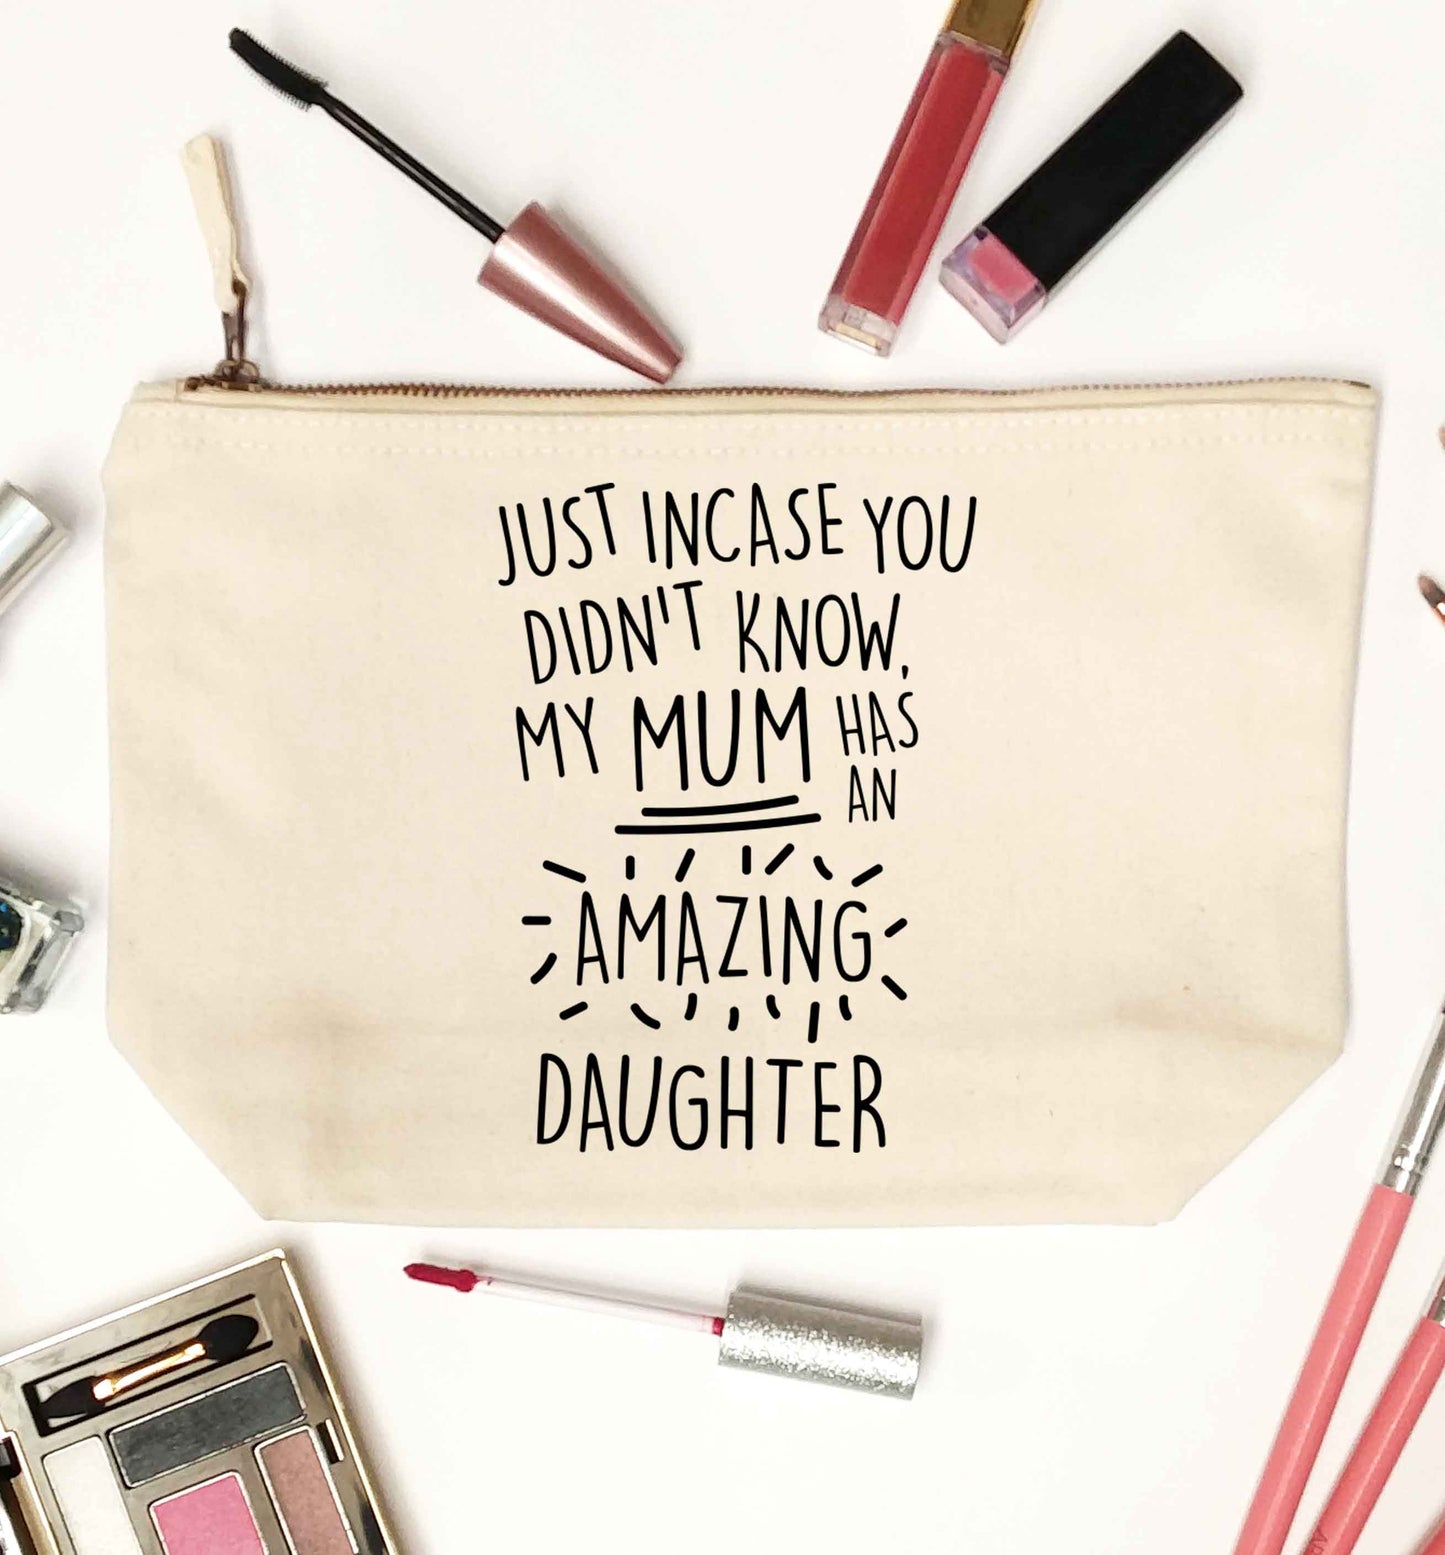 Just incase you didn't know my mum has an amazing daughter natural makeup bag